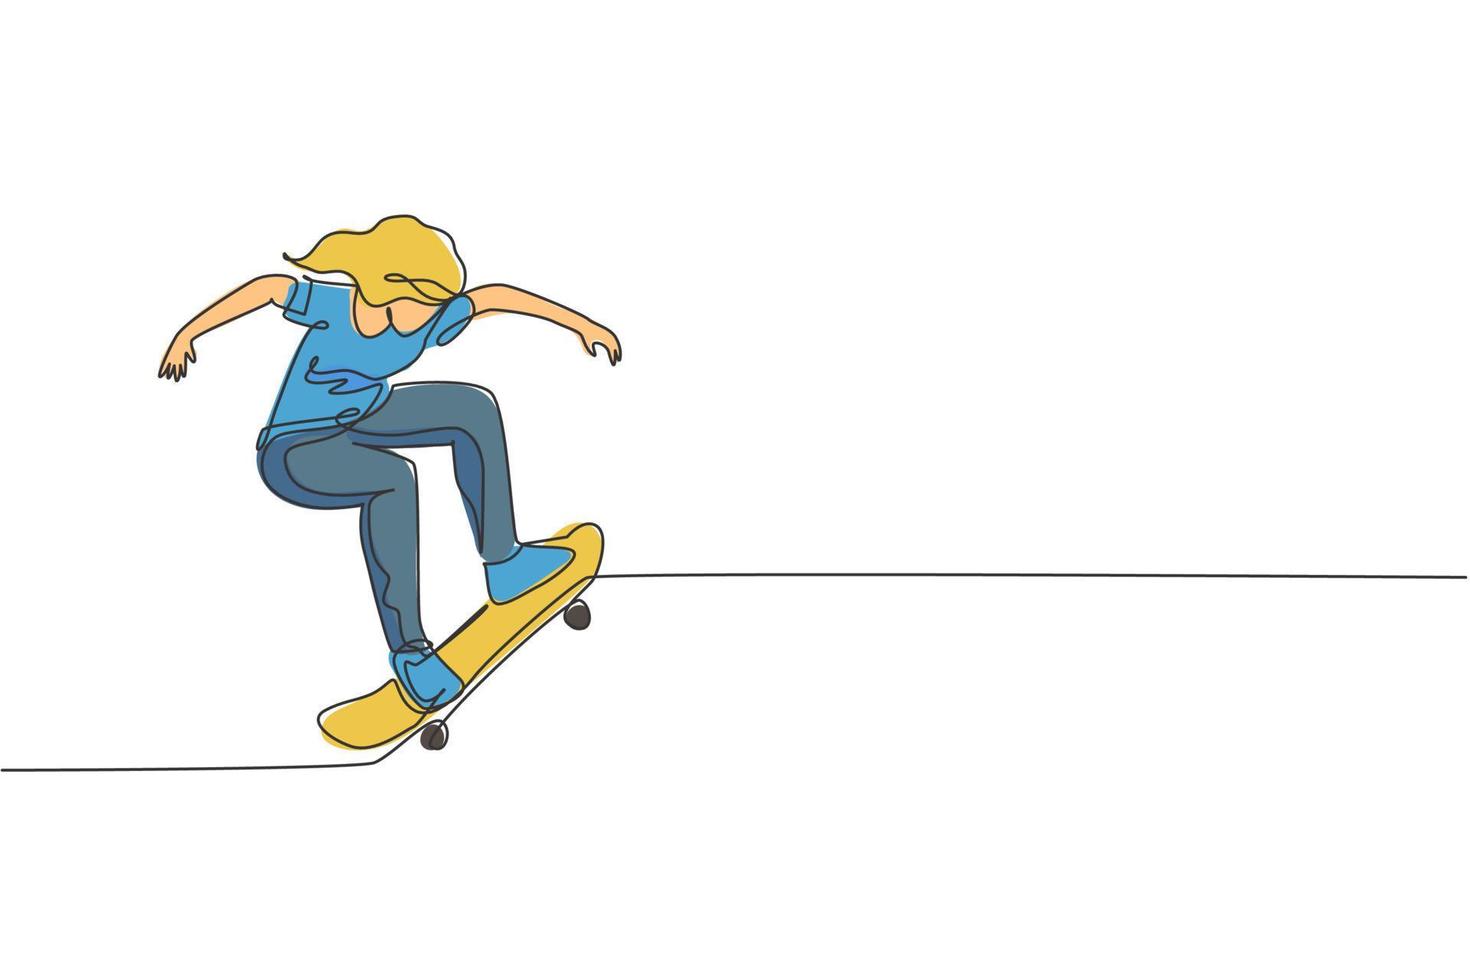 en kontinuerlig linjeteckning av ung cool skateboardåkare kvinna som rider skateboard gör ett trick i skatepark. extrem tonåring sport koncept. dynamisk en rad rita grafisk design vektorillustration vektor